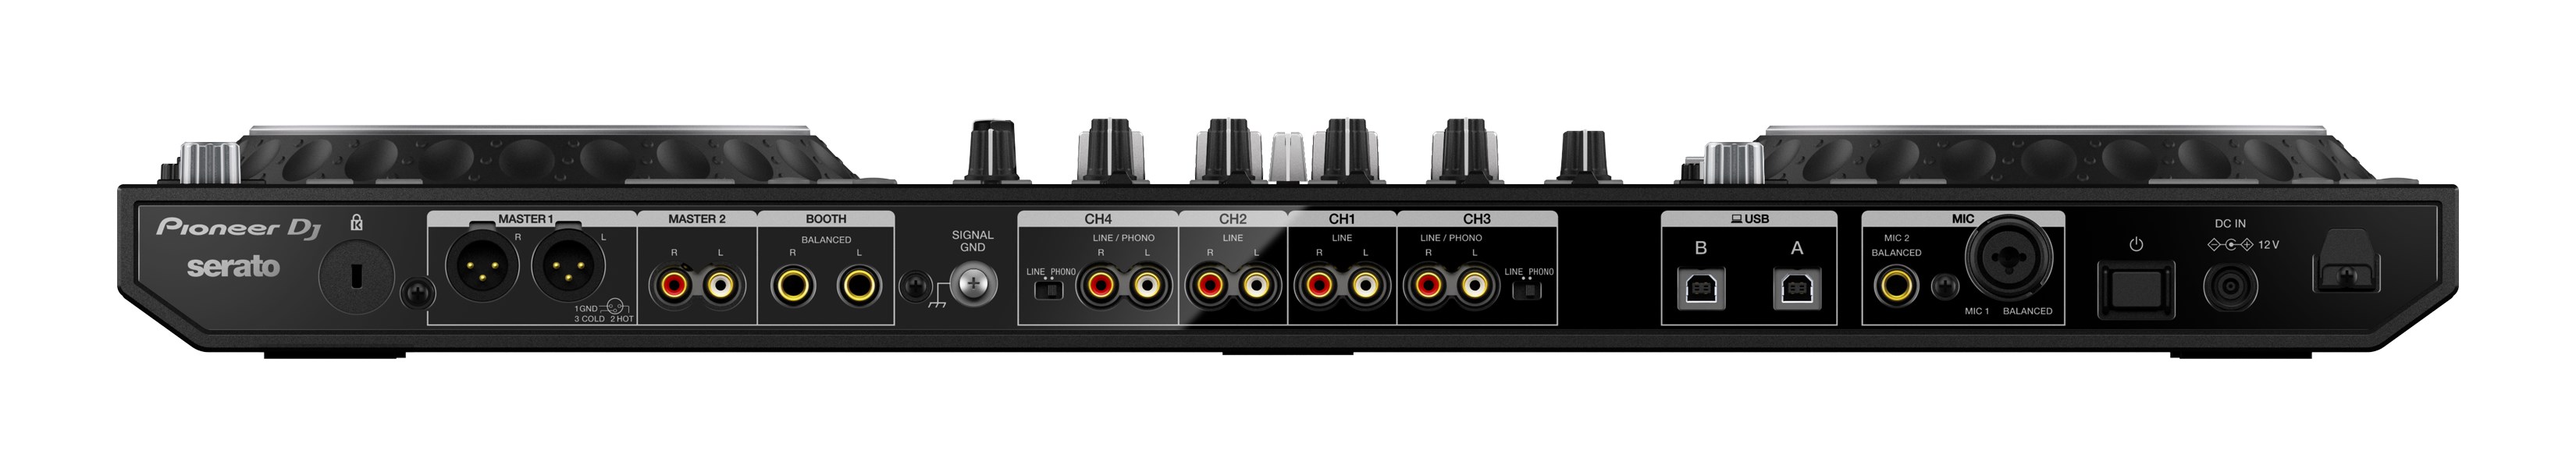 Pioneer Dj Ddj-1000srt - USB DJ-Controller - Variation 3